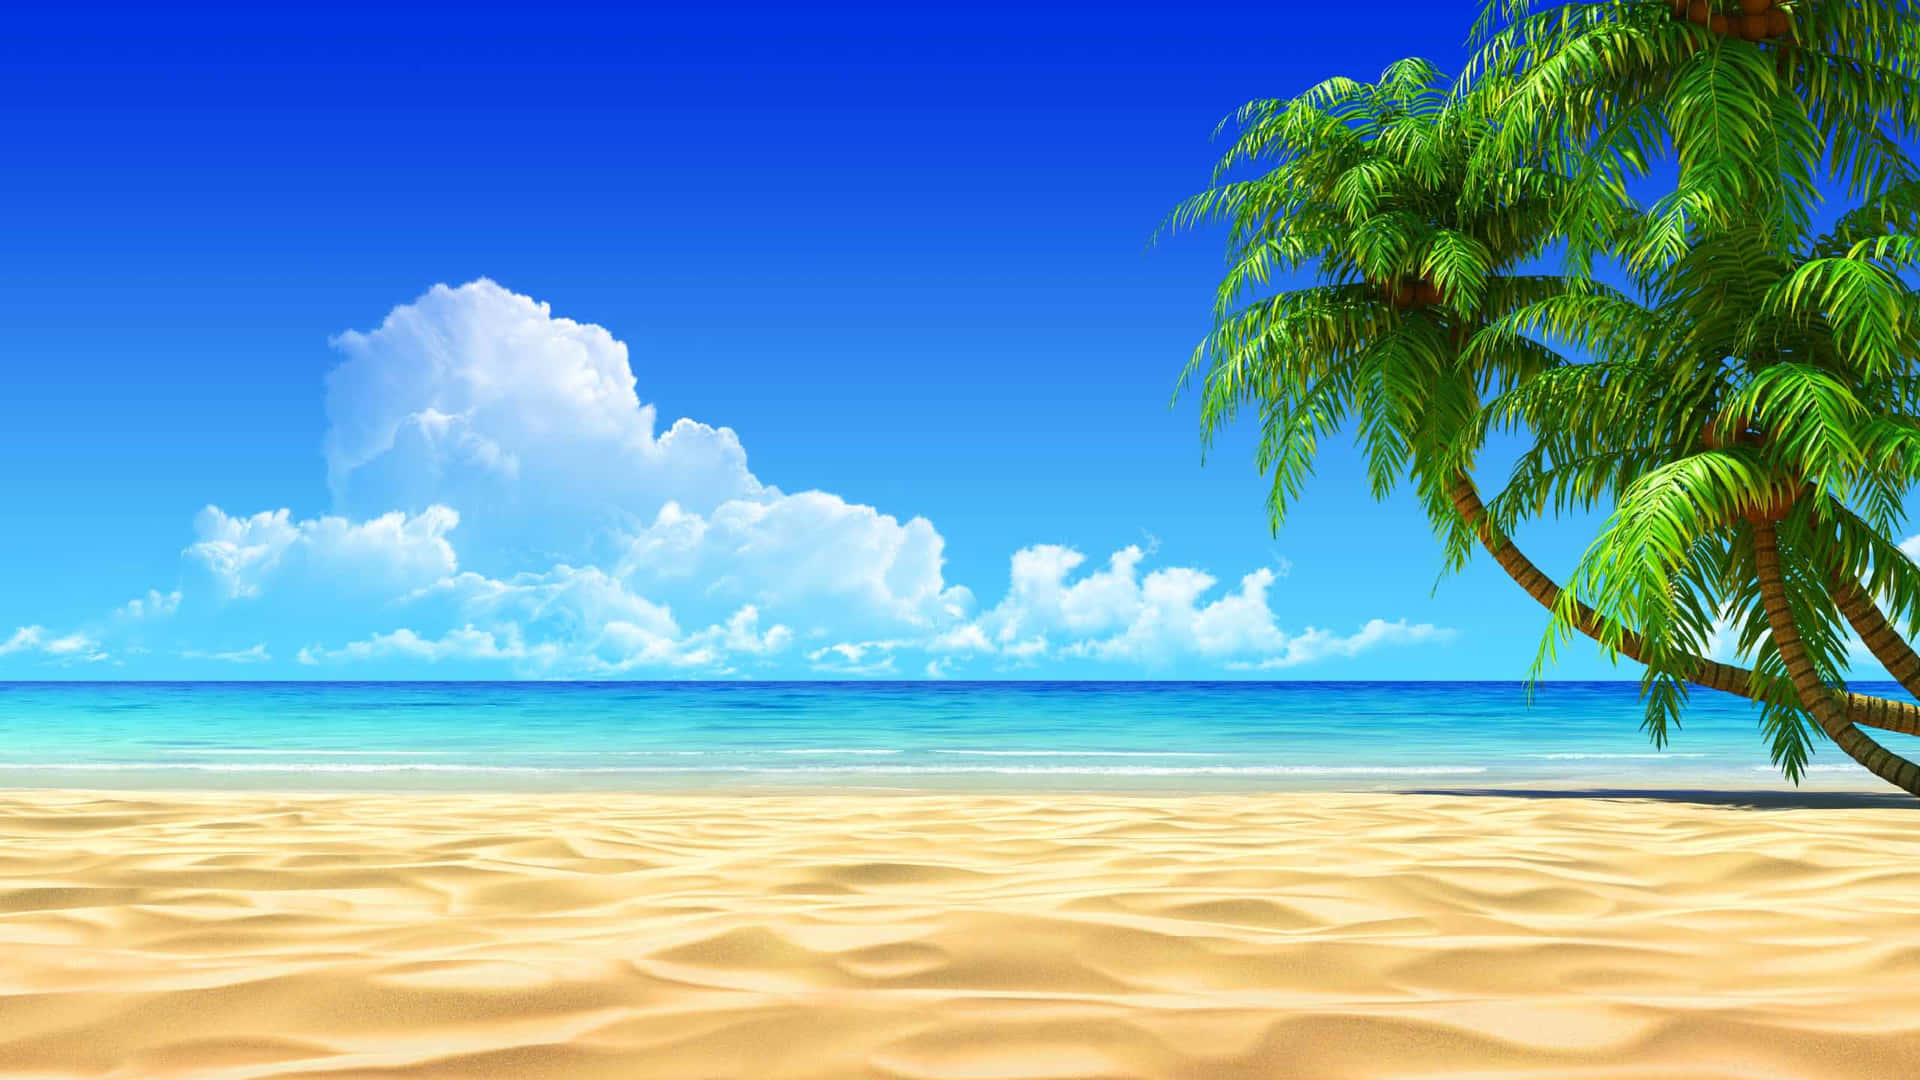 Enjoy the tropical beaches of paradise. Wallpaper